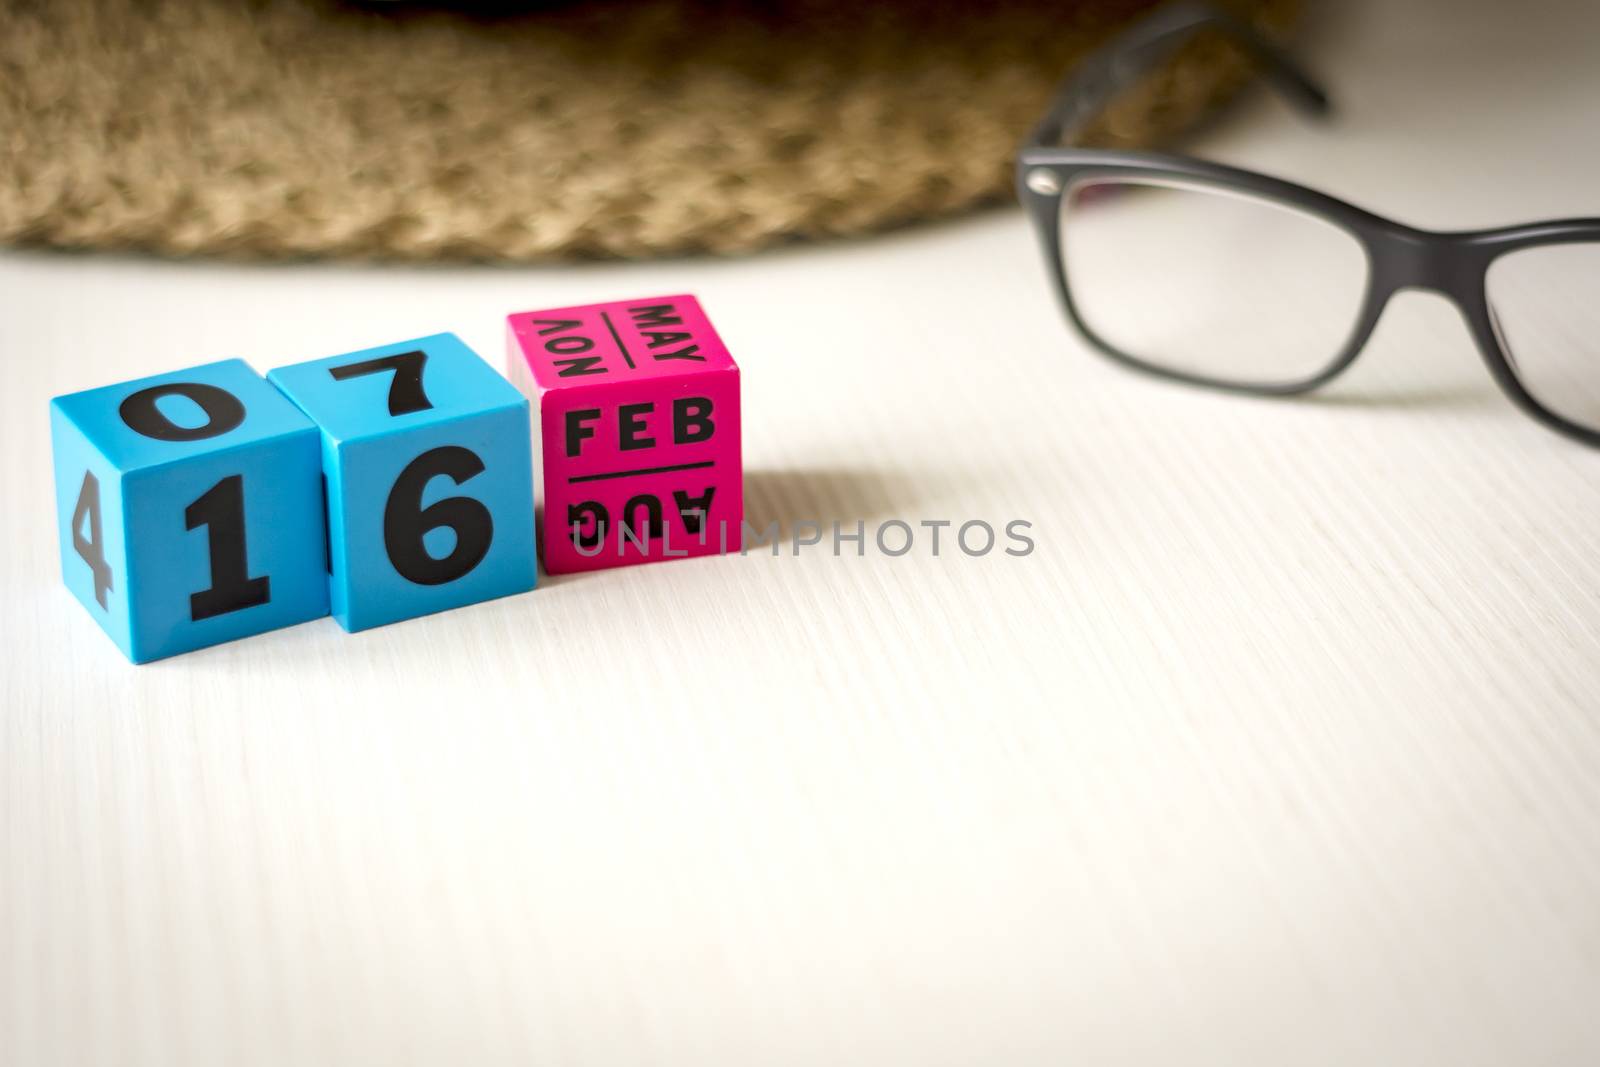 perpetual calendar set at the date of February 16th by rarrarorro